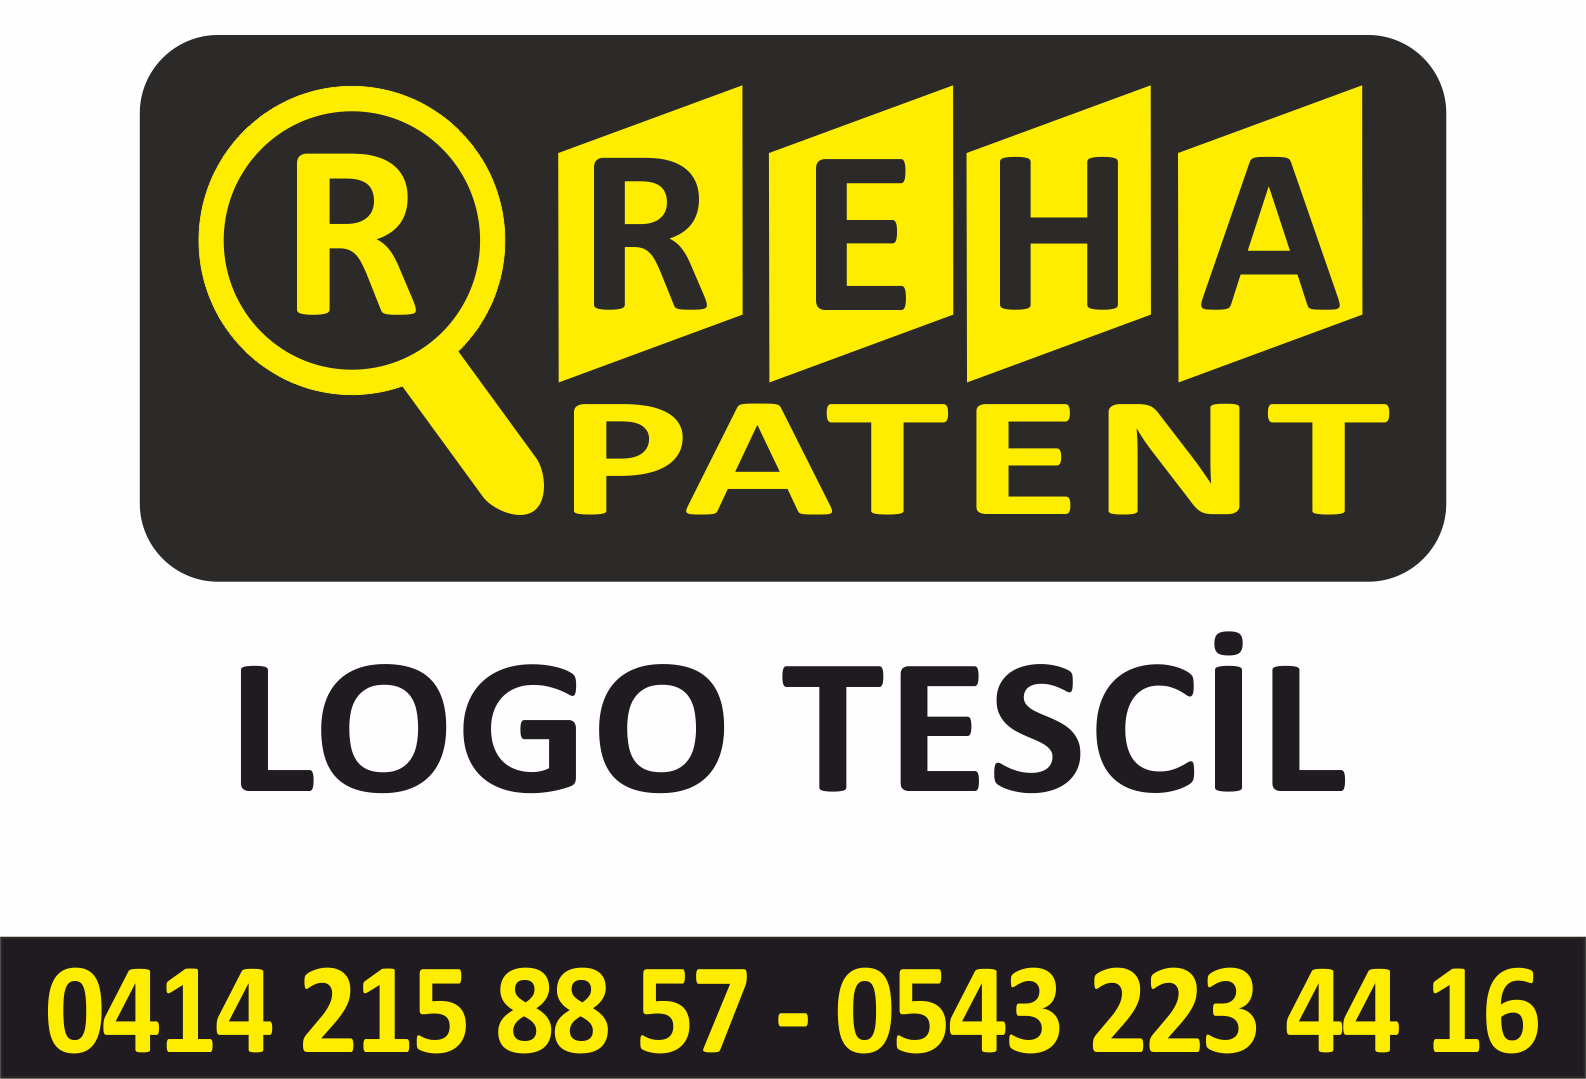 Şanlıurfa Marka Tescil Patent Ofisi Logo Tescil